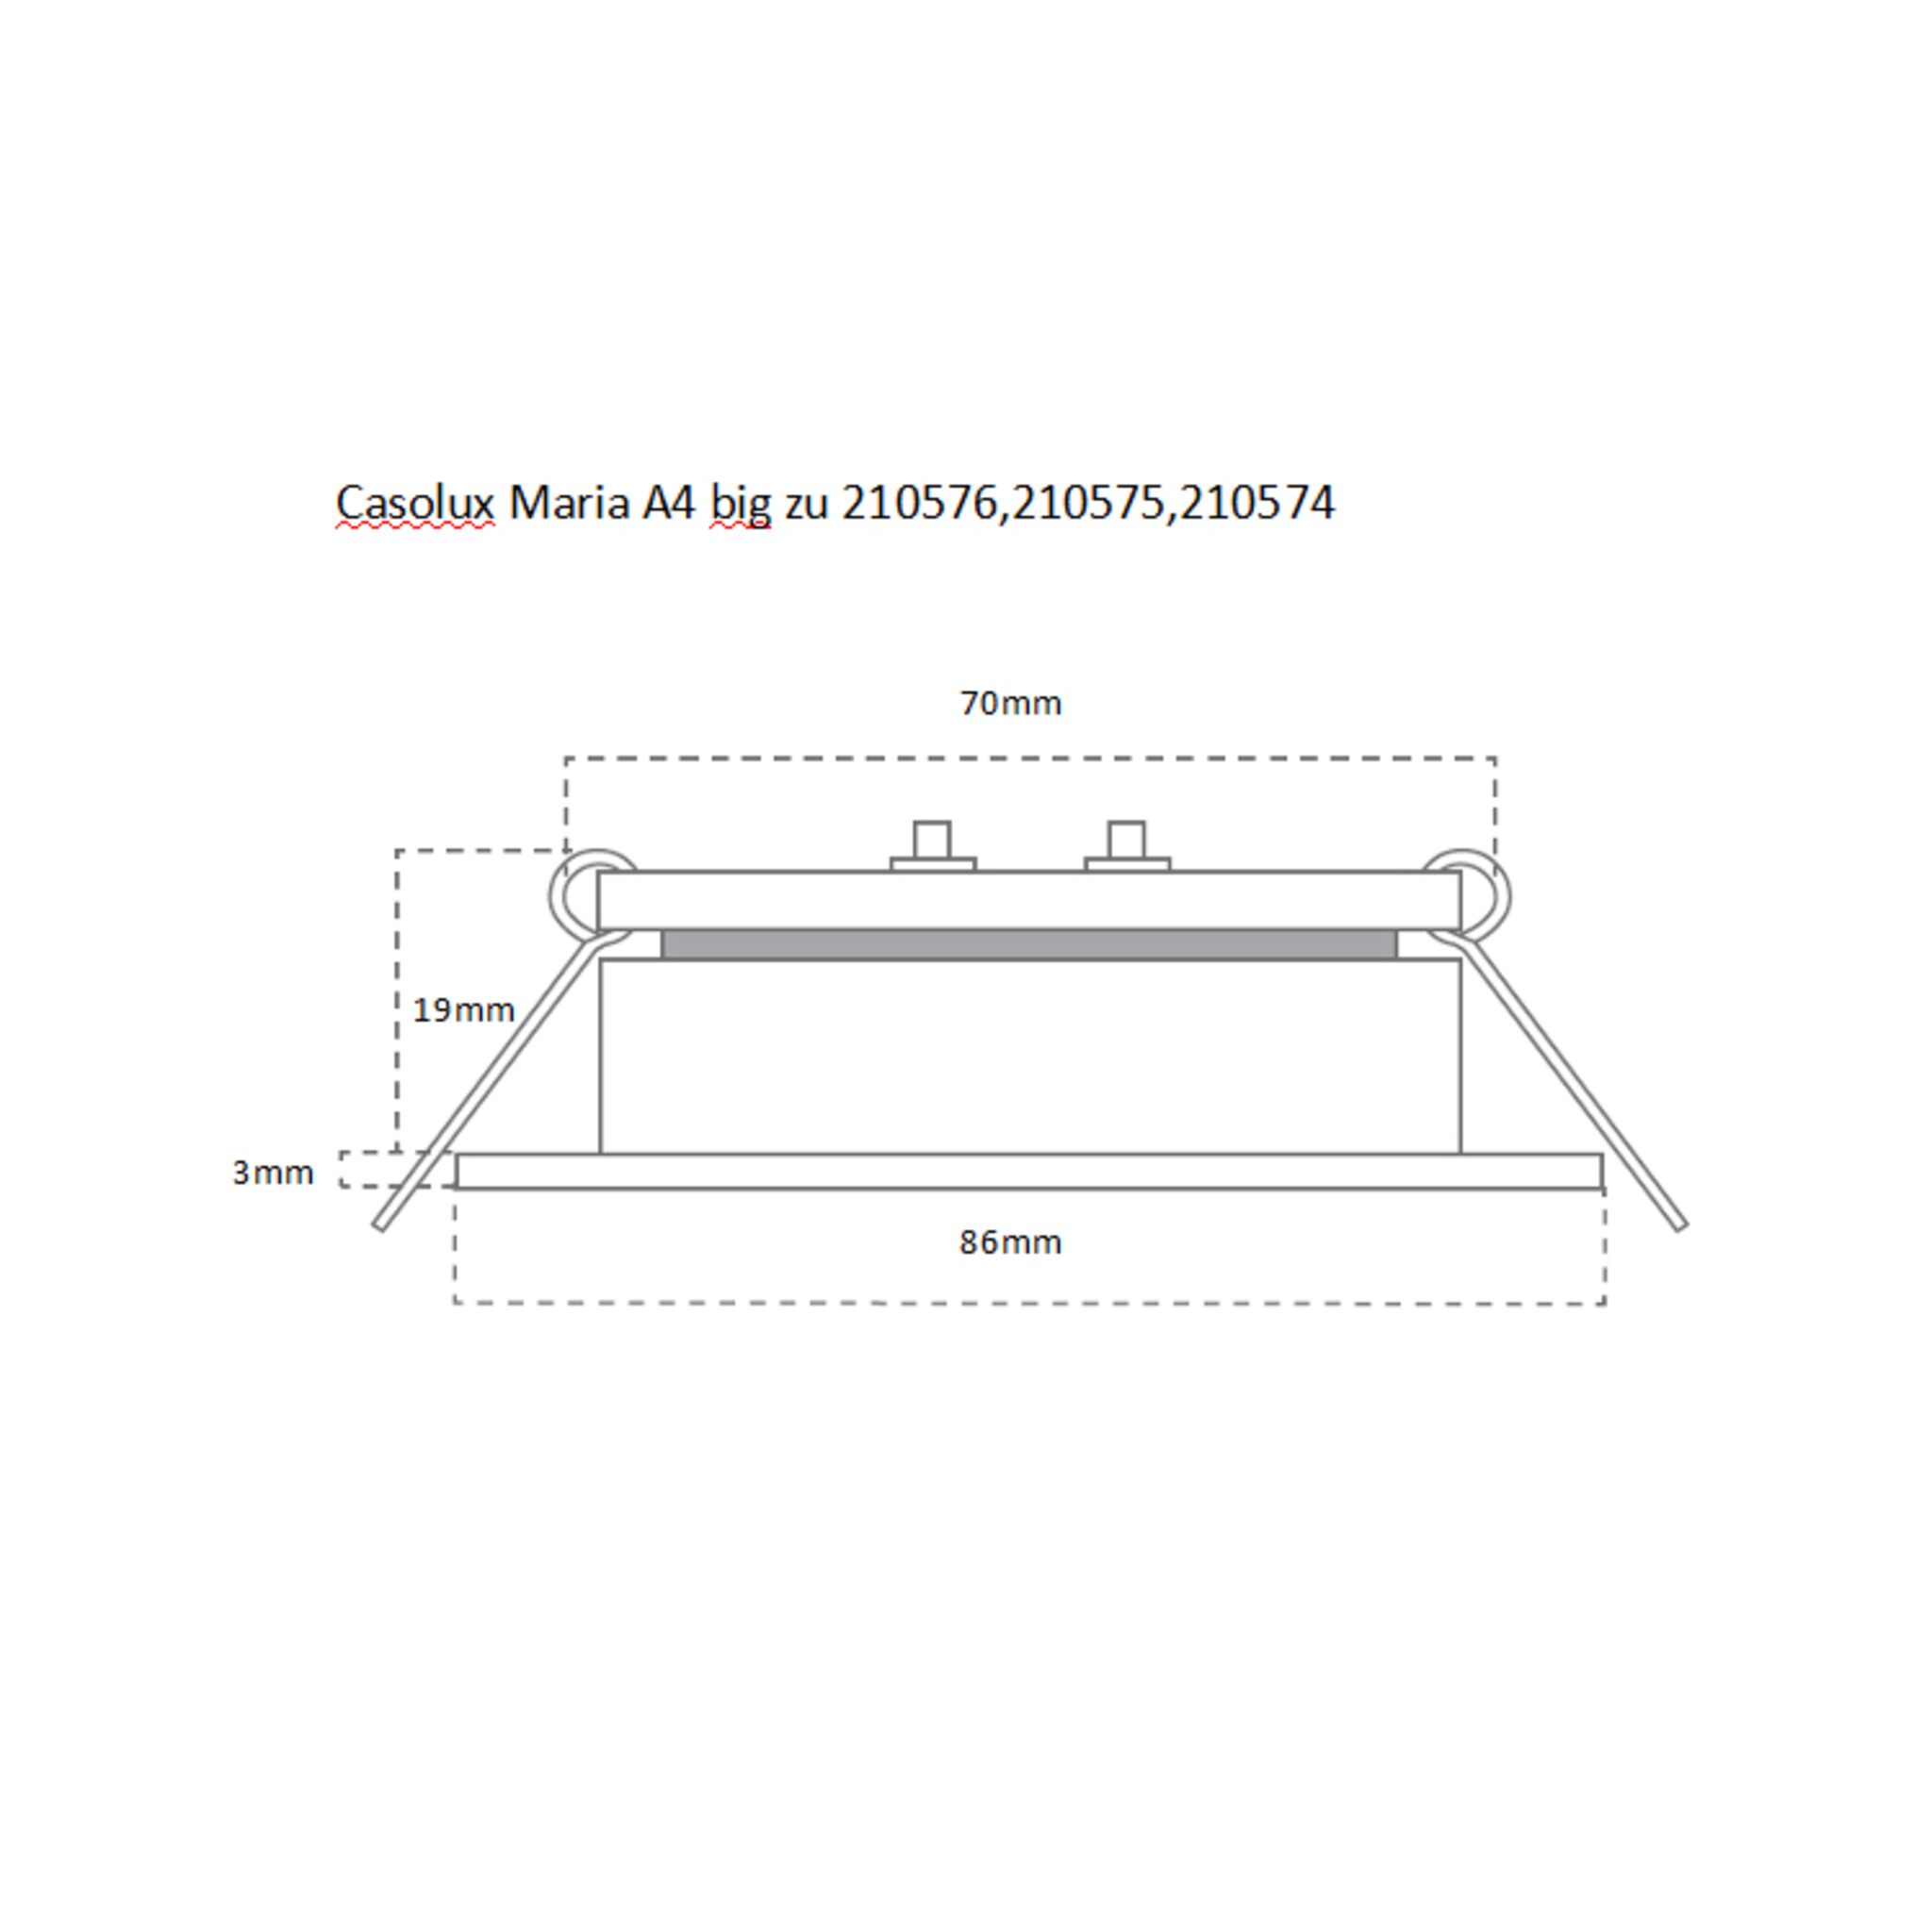 Casolux LED ceiling light Maria A4, Big 3W